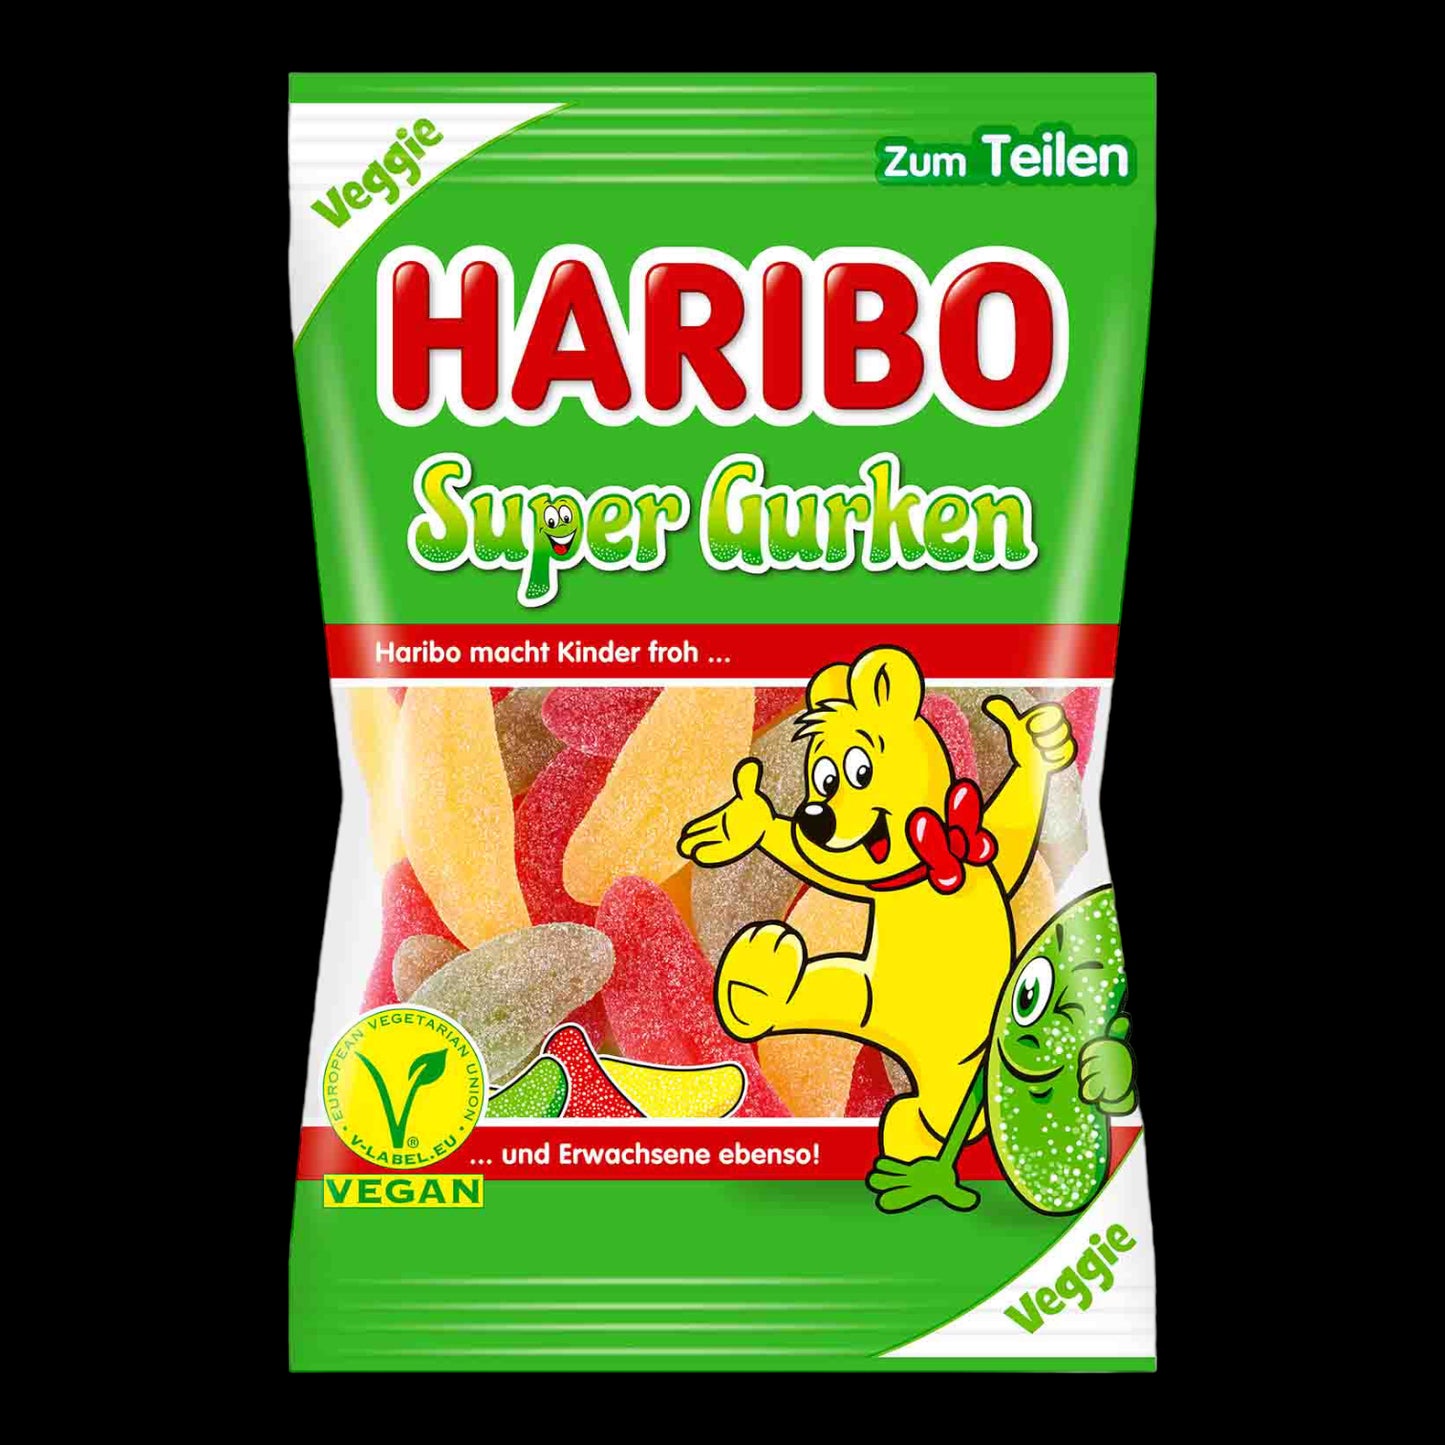 Haribo Super Gurken Veggie 200g